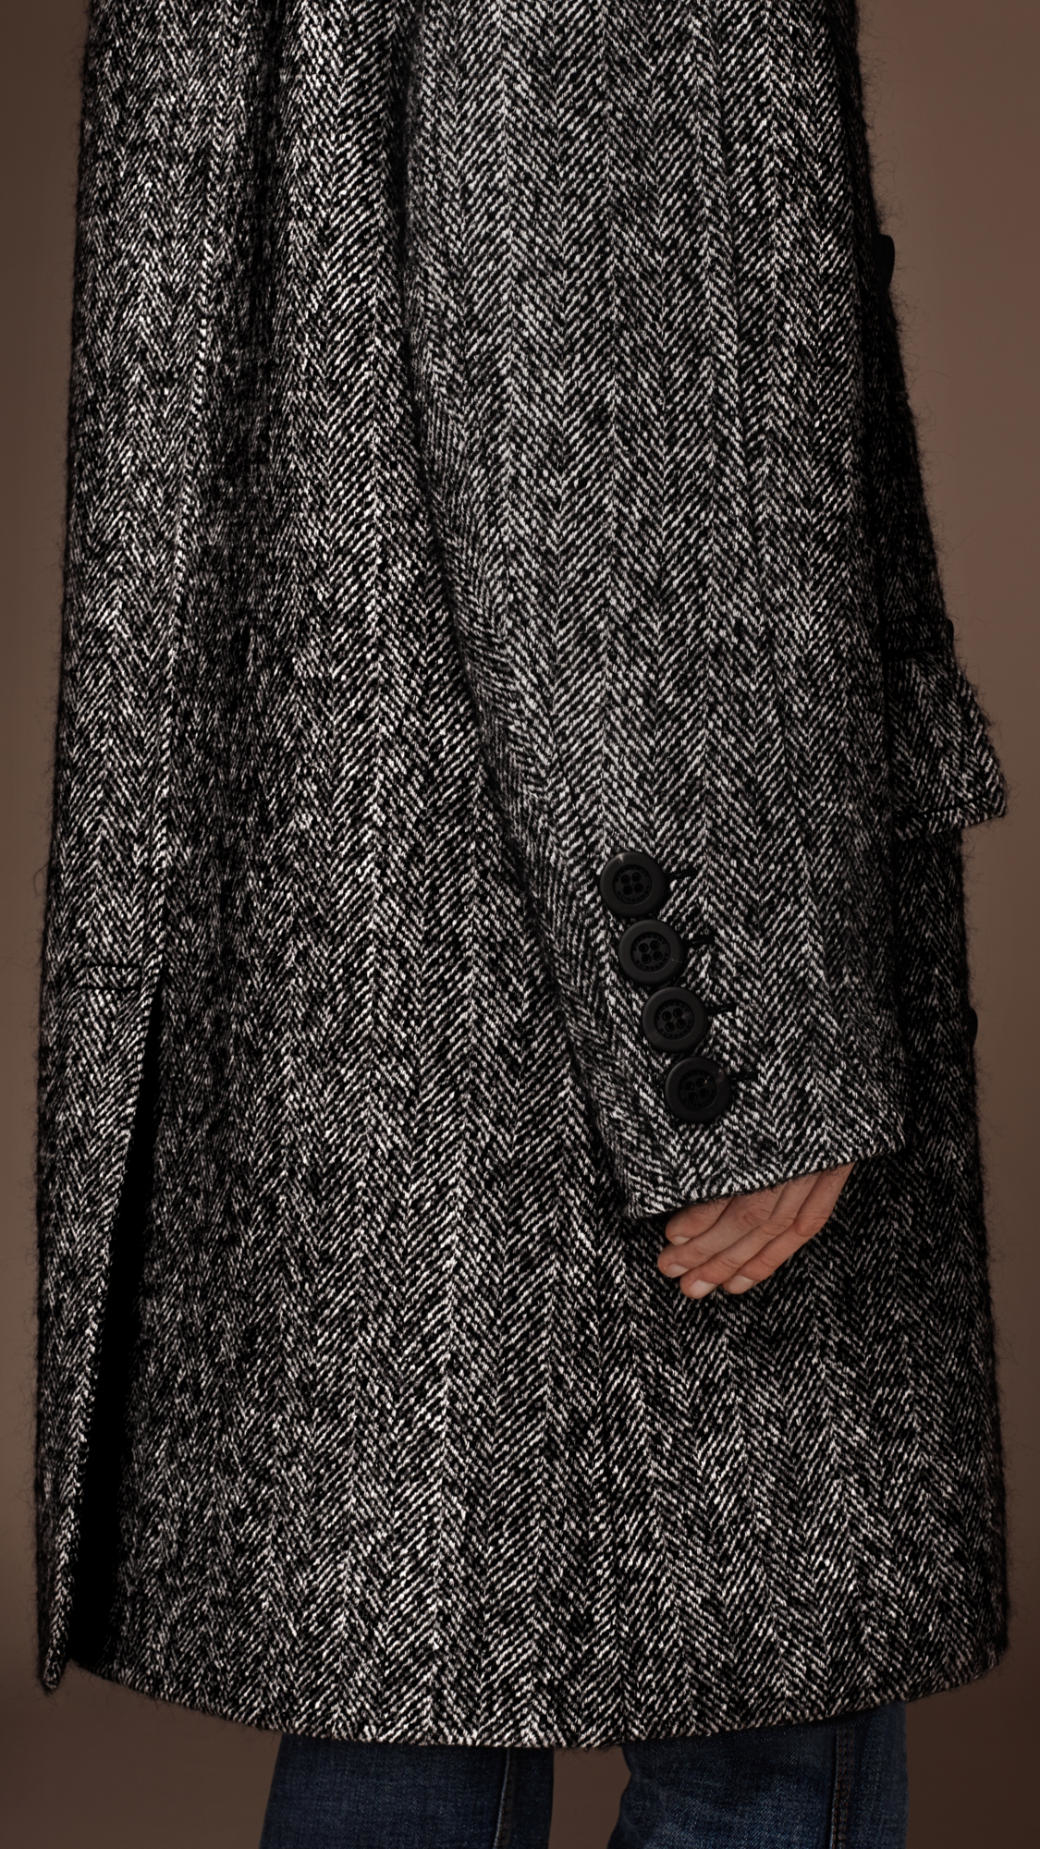 Burberry Unlined Herringbone Wool Blend Topcoat in Black/White (Black) for  Men - Lyst